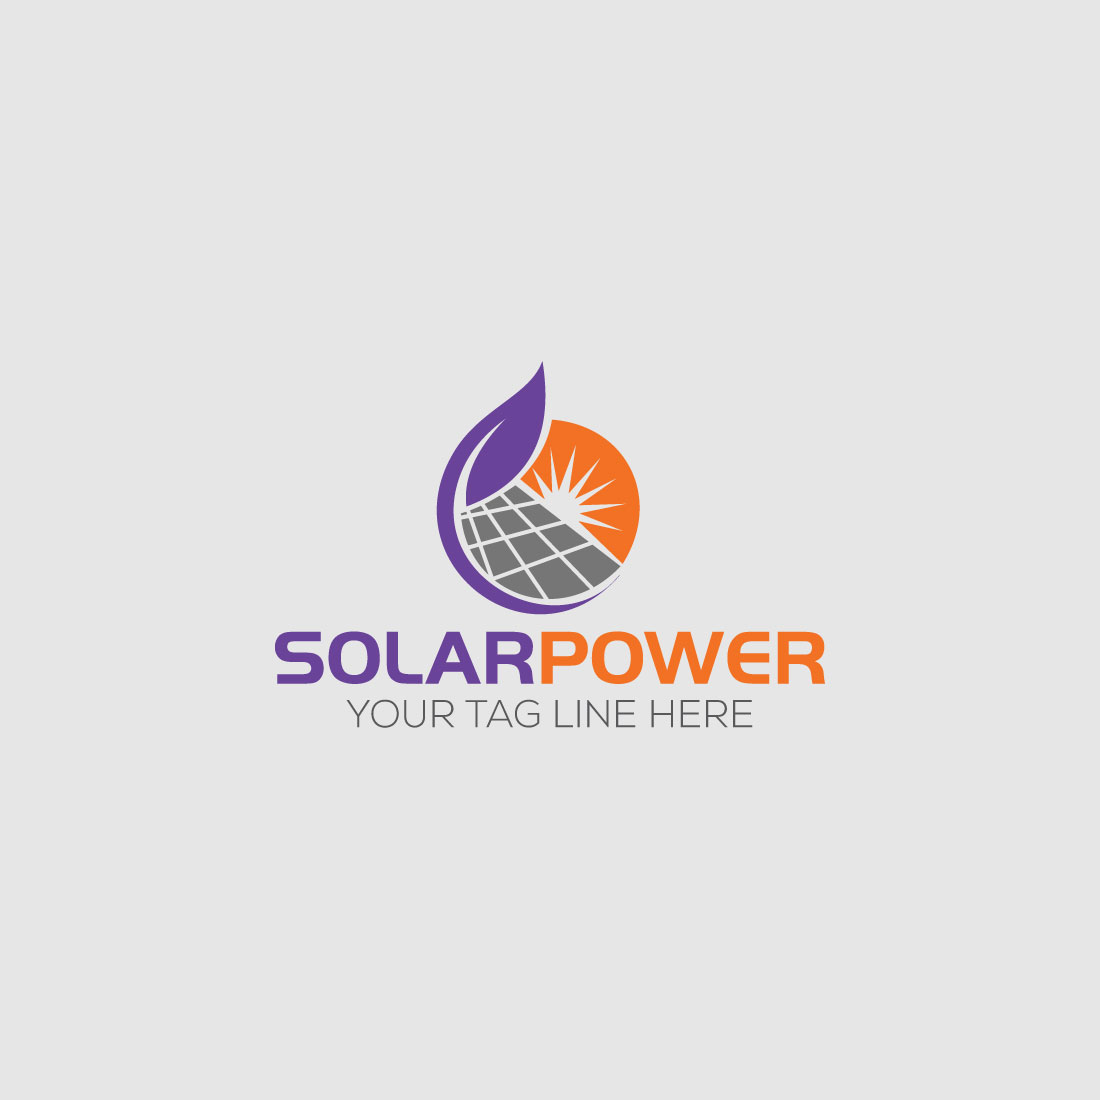 Solar Power Energy Logo Template main cover.